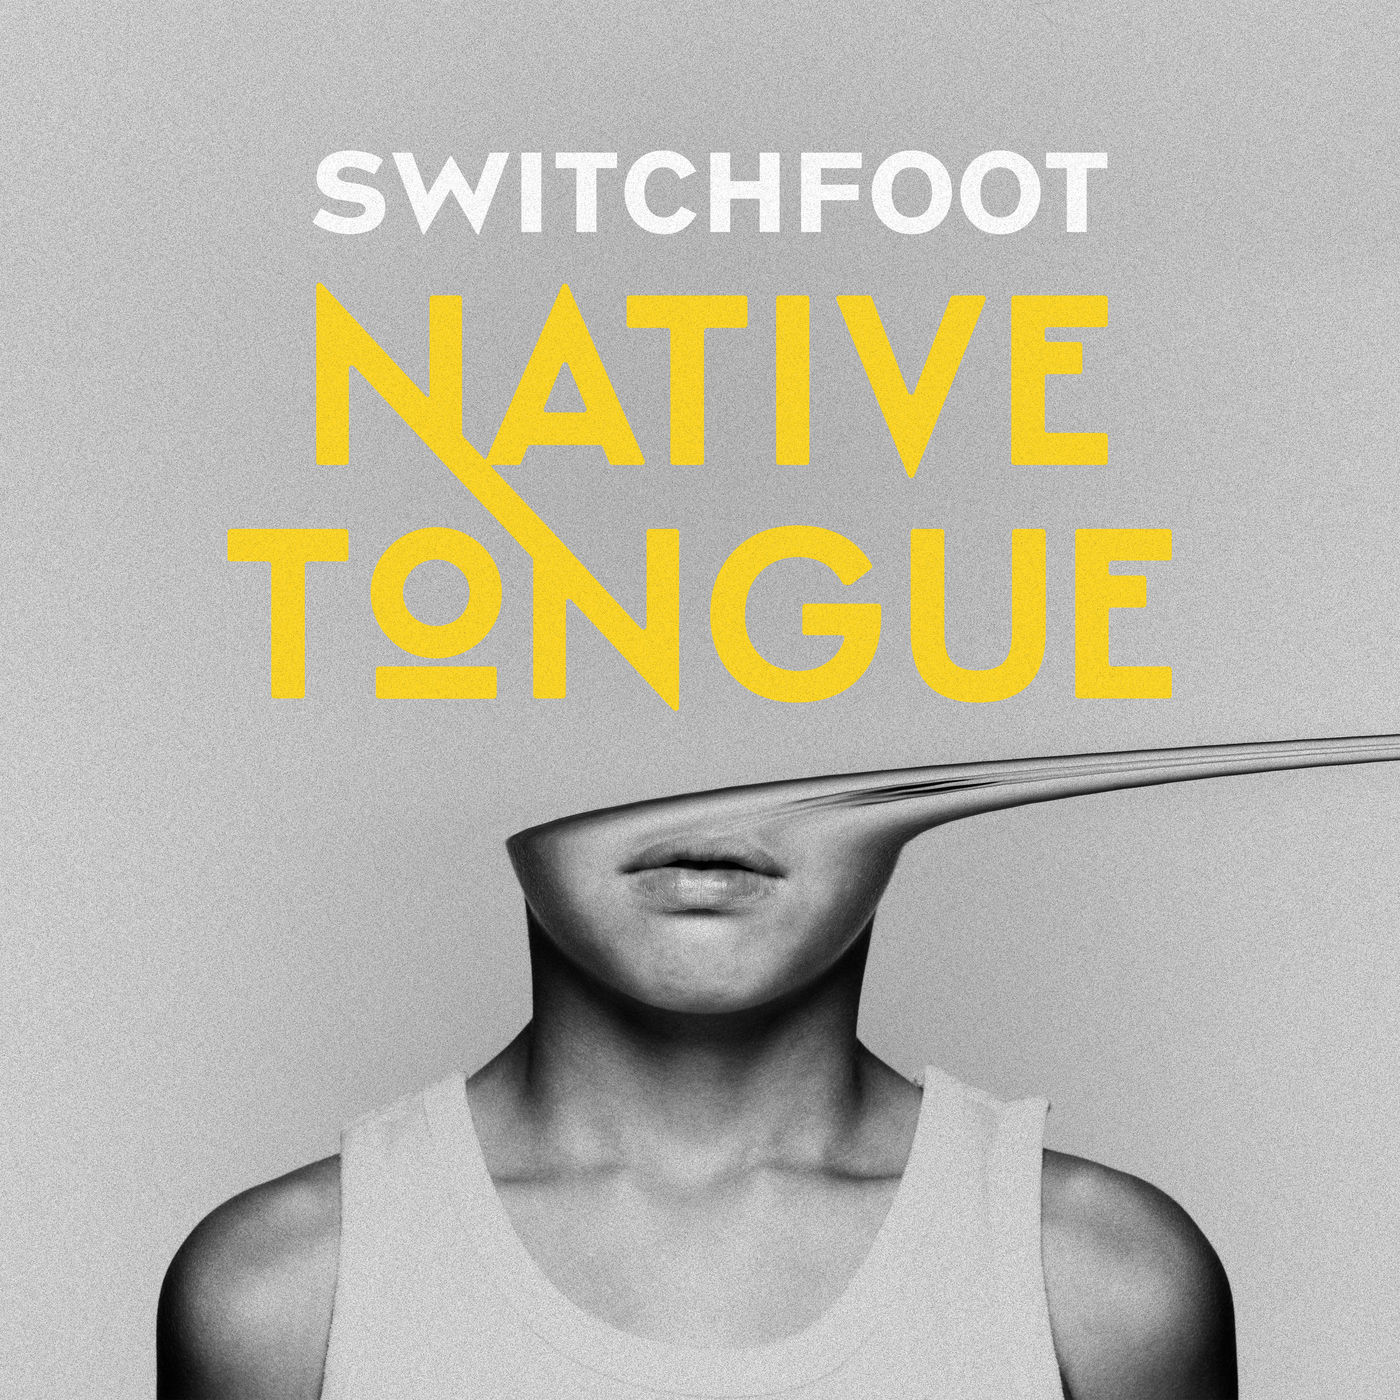 Switchfoot - Native Tongue (2019) Album Info